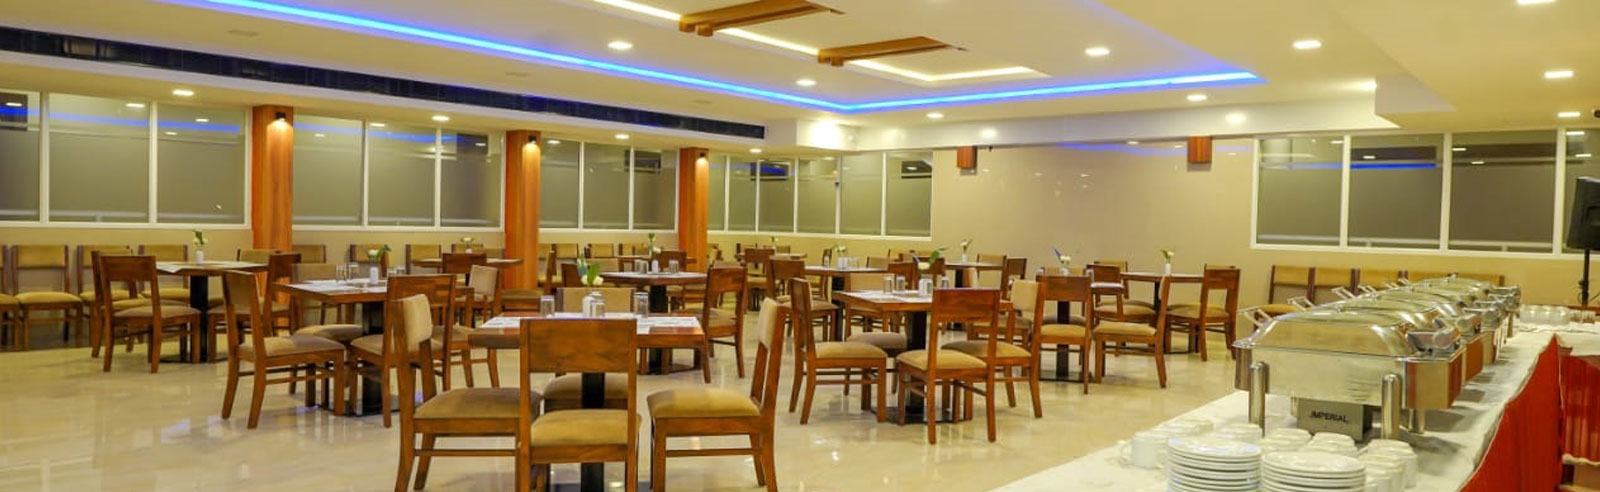 sunstar residency and food plaza in kottayam